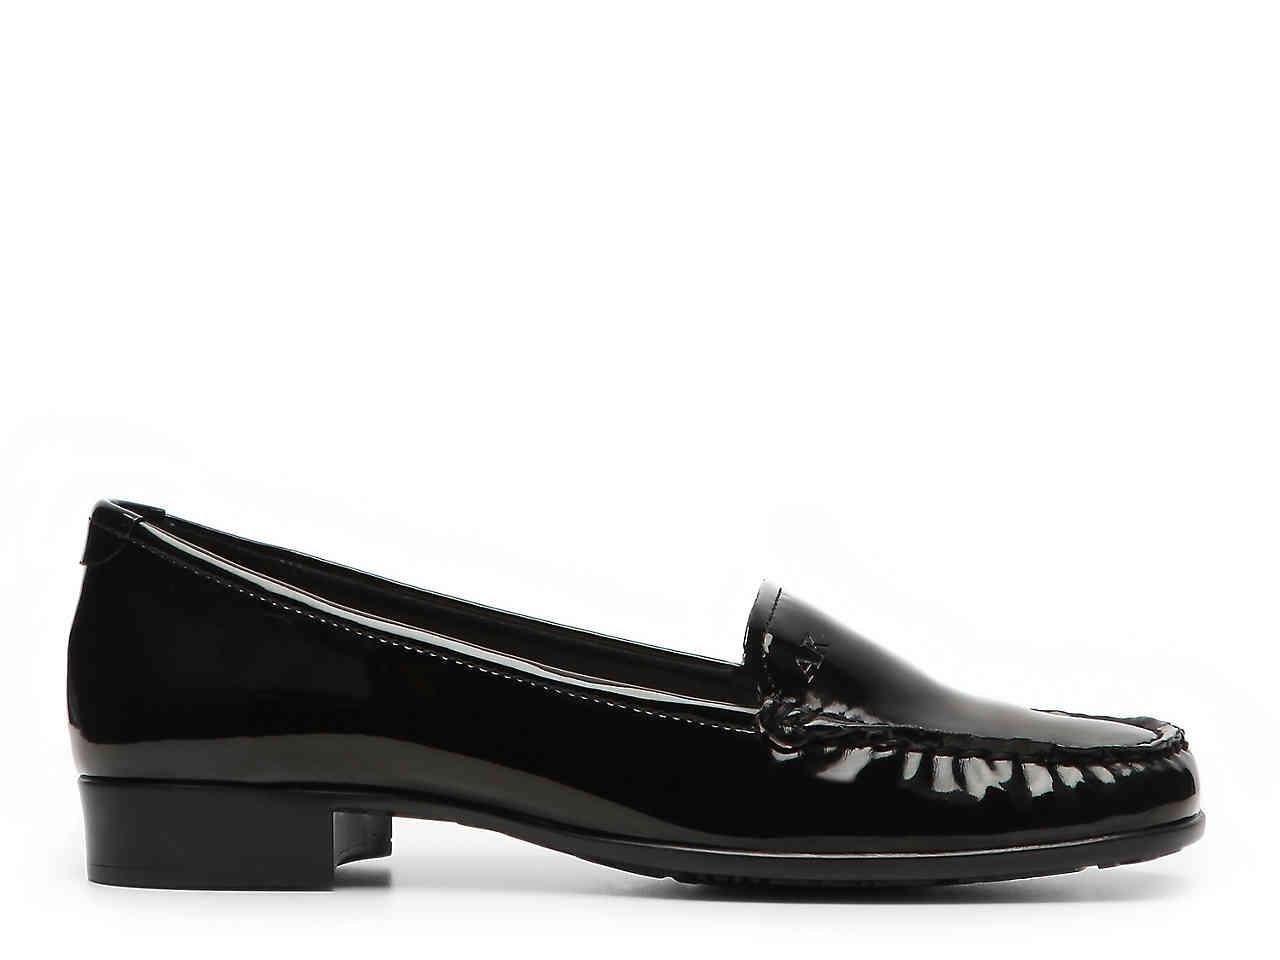 Anne Klein Leather Vama Patent Loafer in Black - Lyst